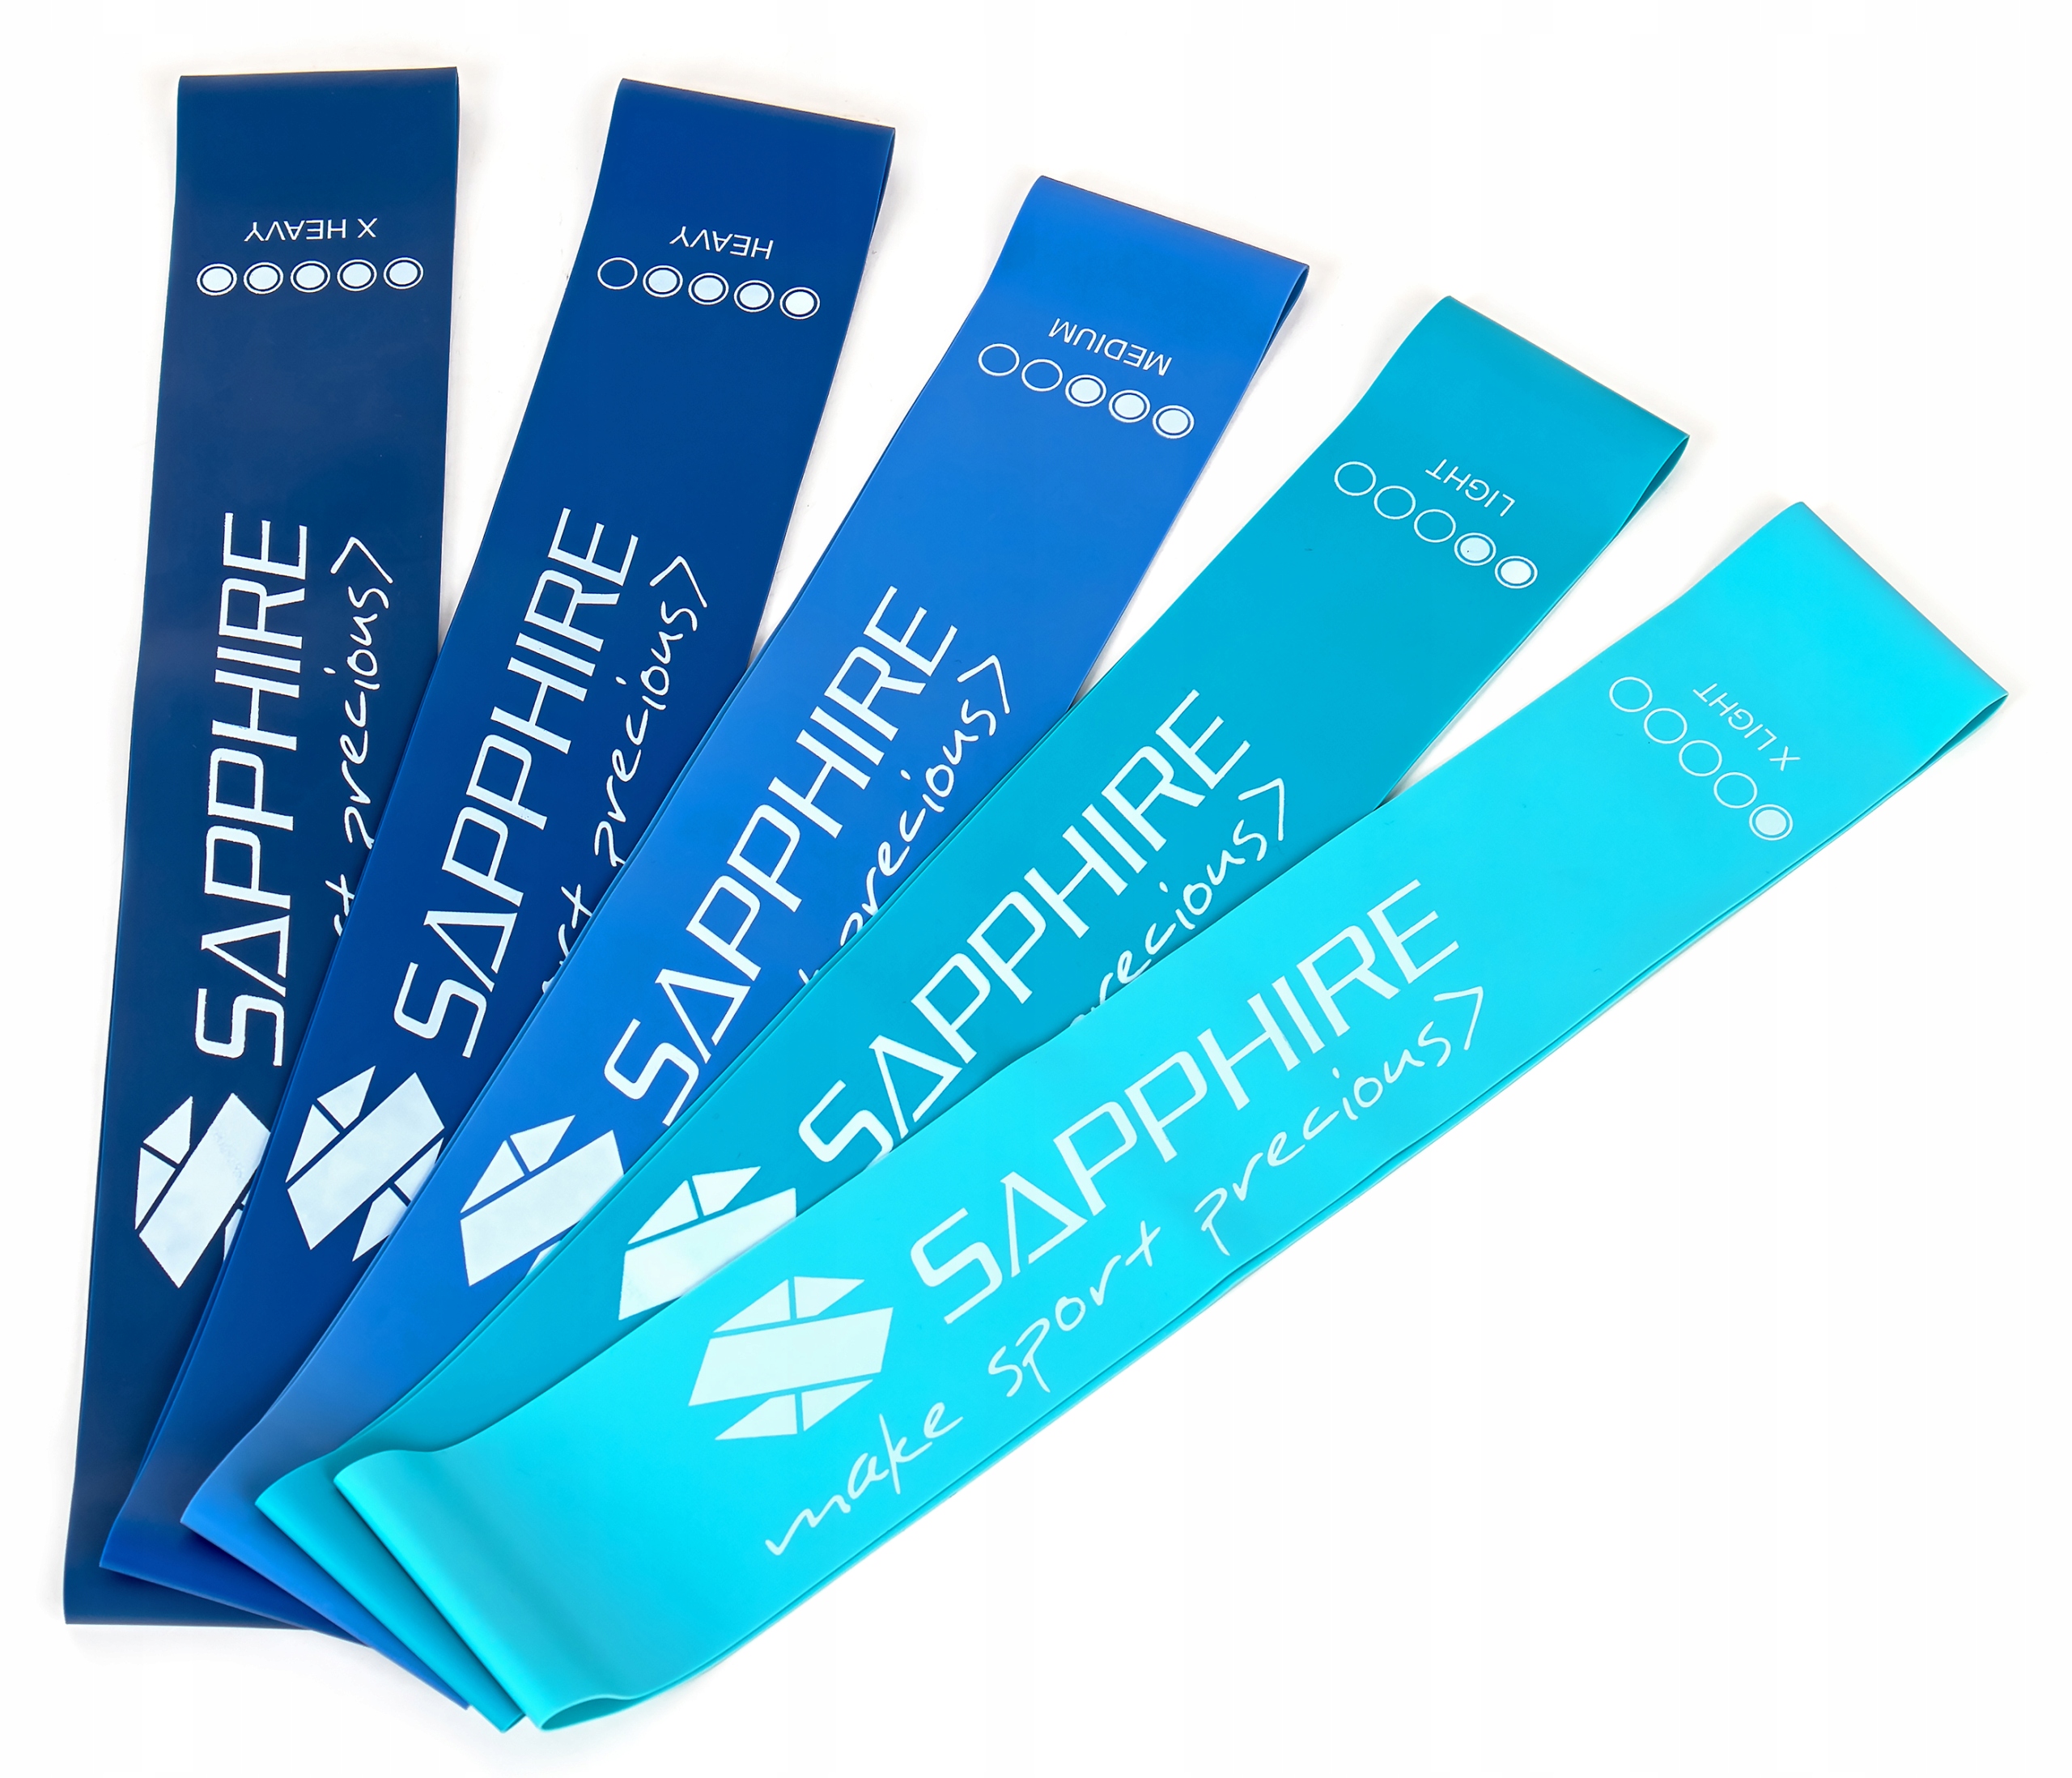 Zestaw gum oporowych Sapphire SG-1314